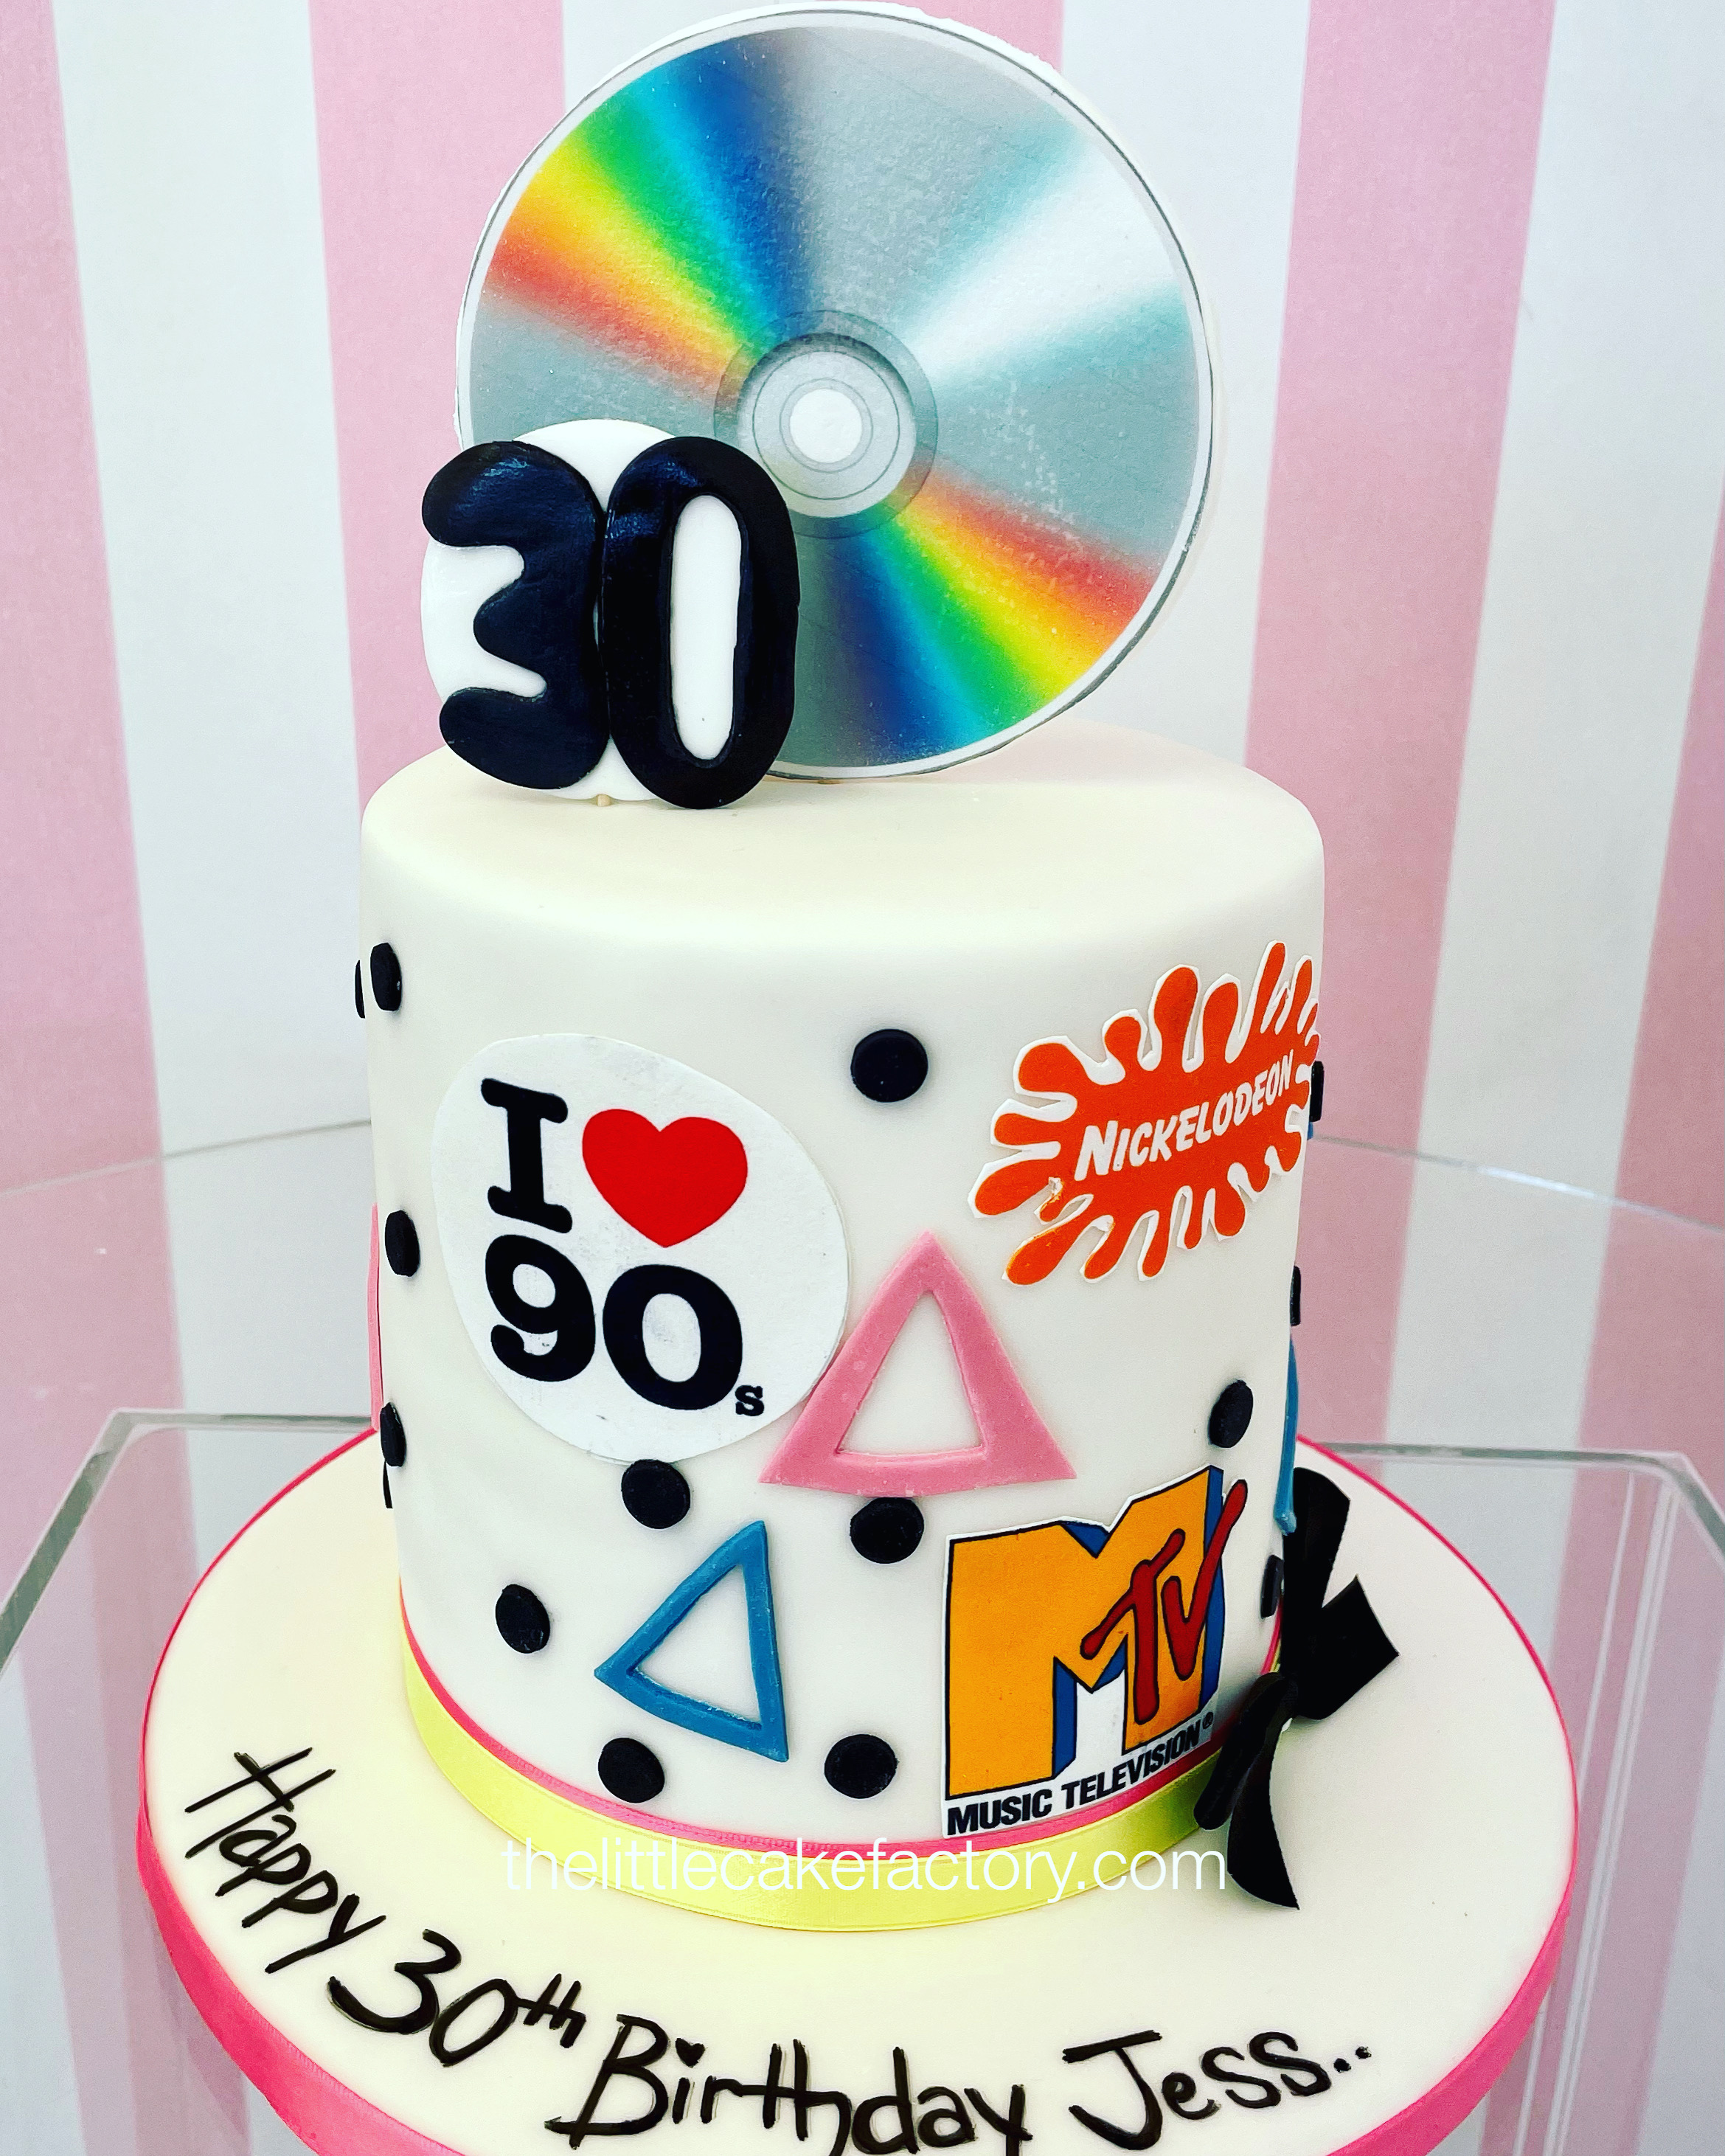 90s birthday cake Cake | Celebration Cakes